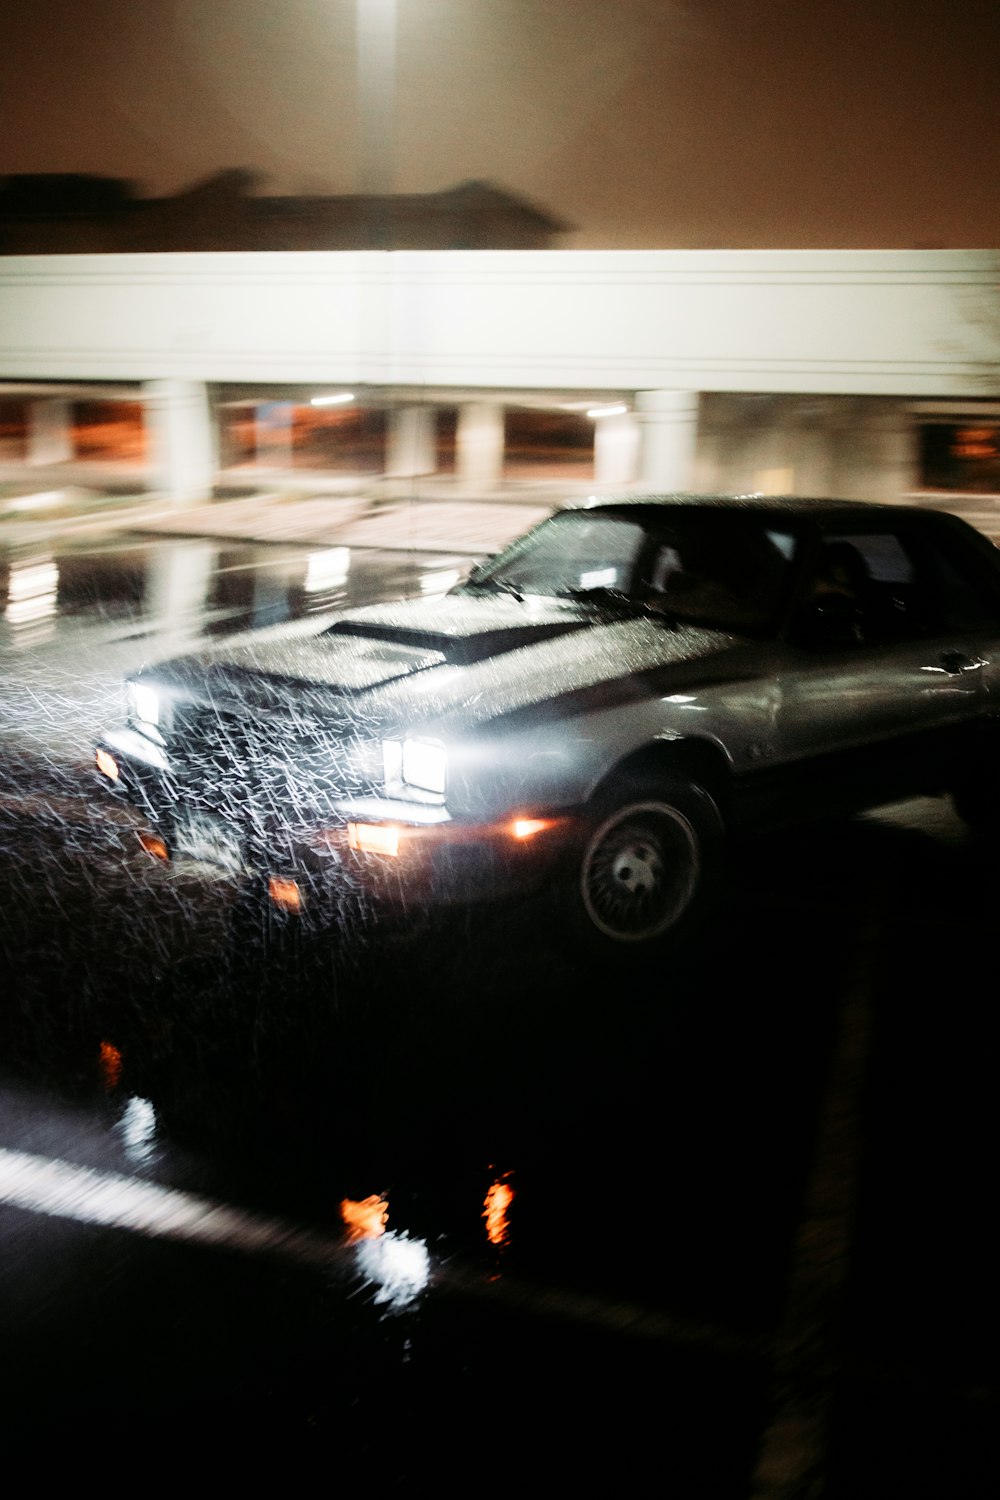 black suv on road during night time photo – Free Car Image on Unsplash